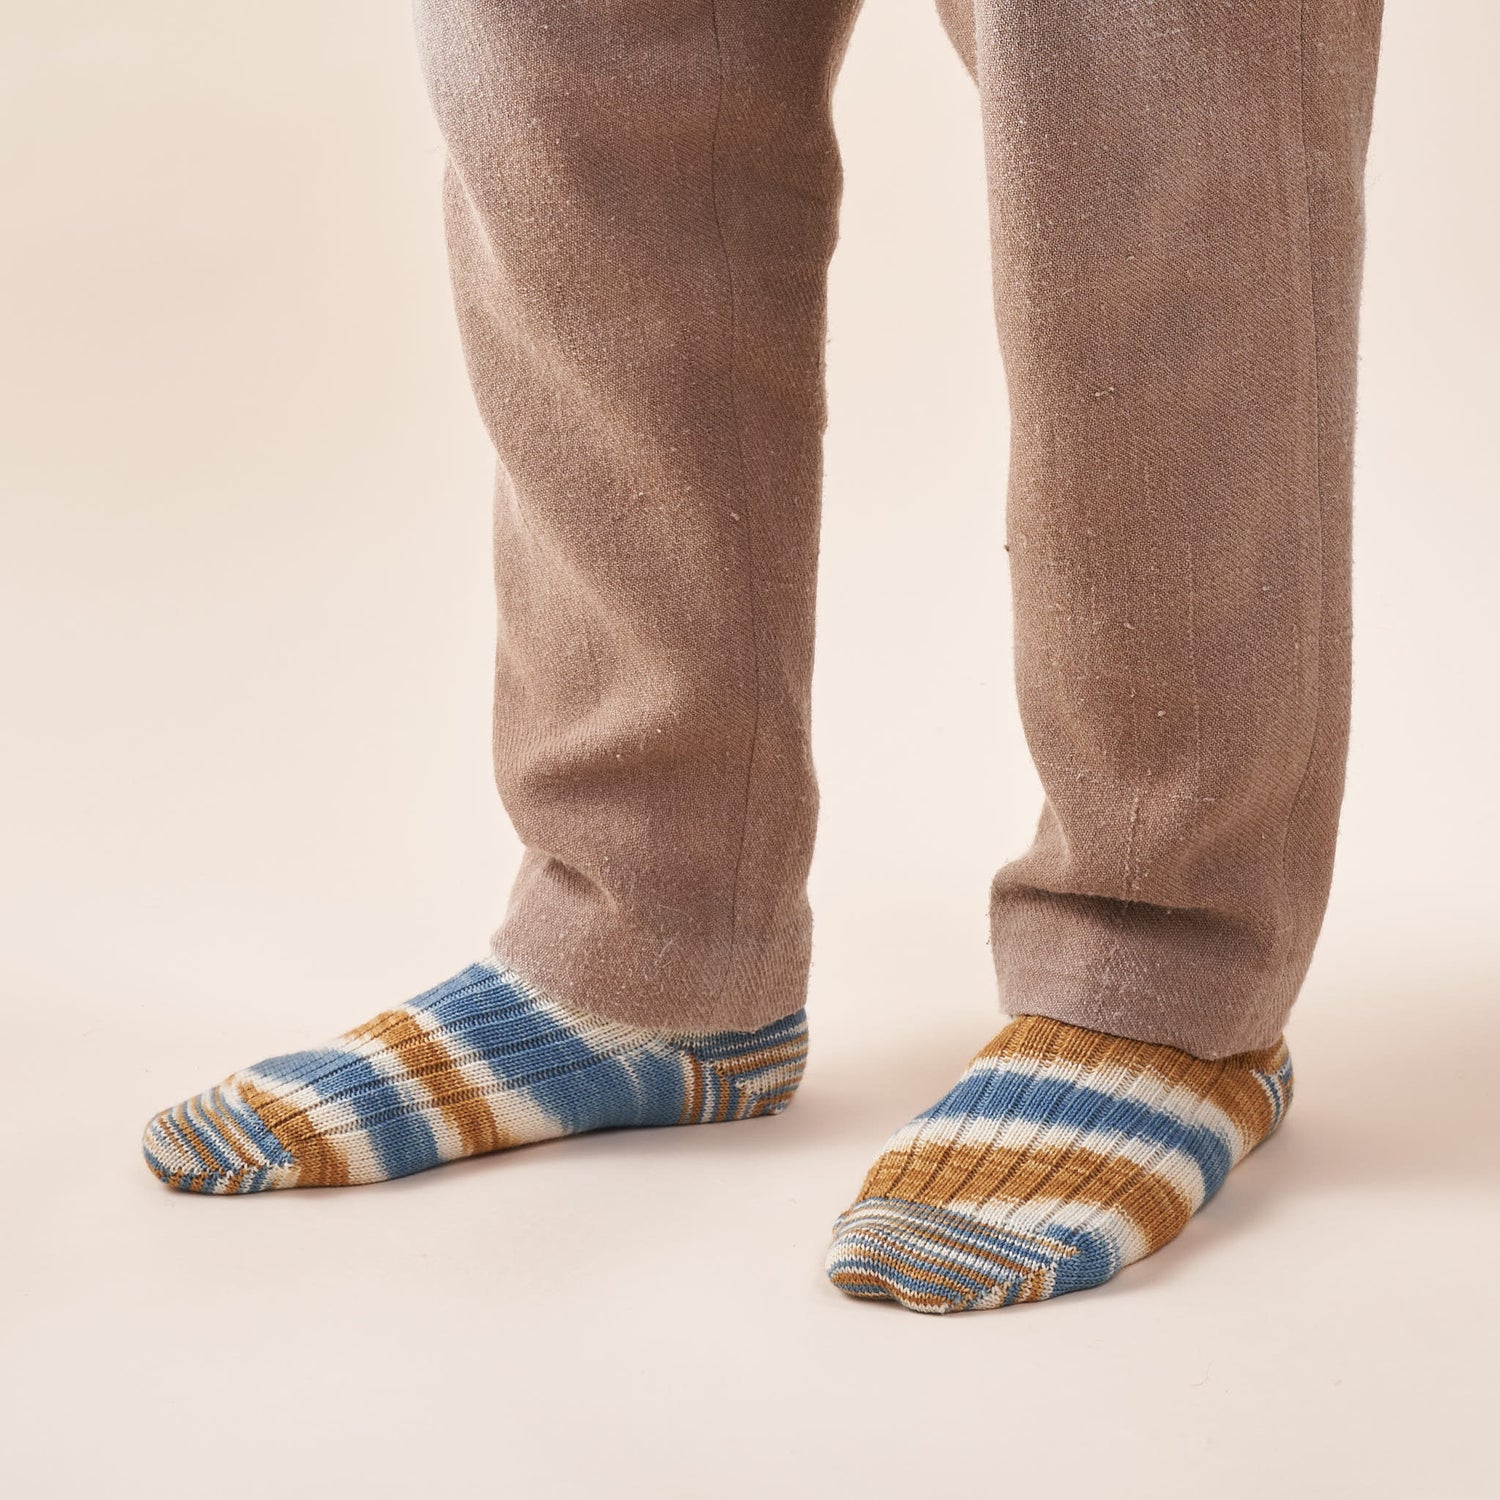 100% Wool Socks, Usnea-Indigo Tie-Dye